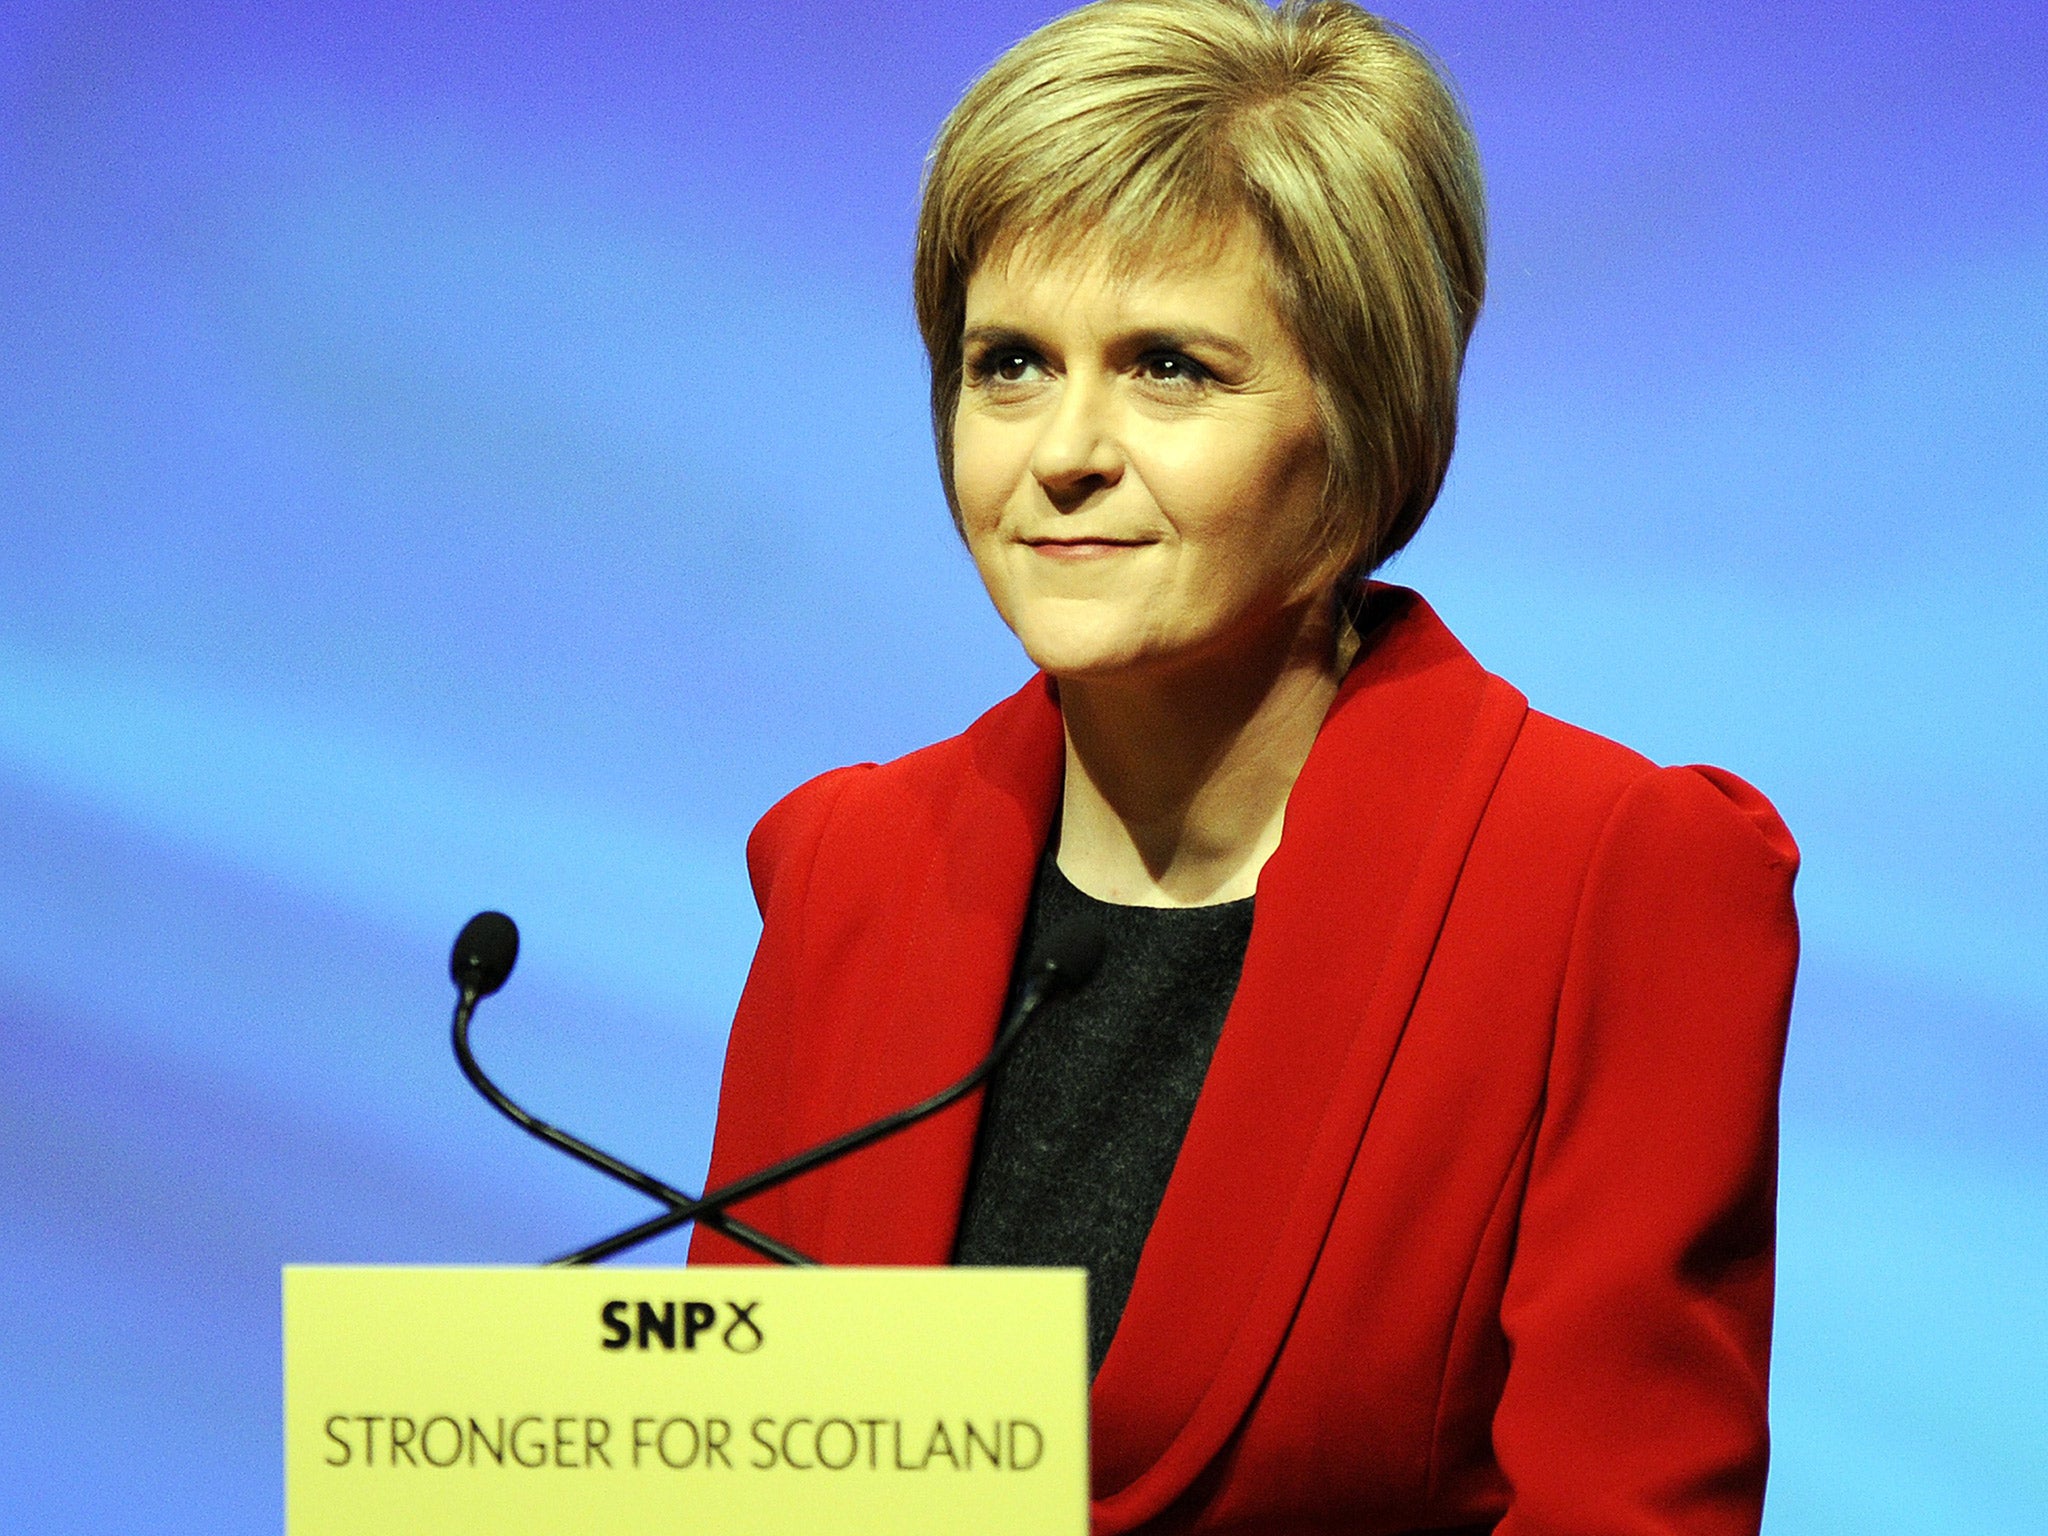 Nicola Sturgeon said Scotland should be given more control